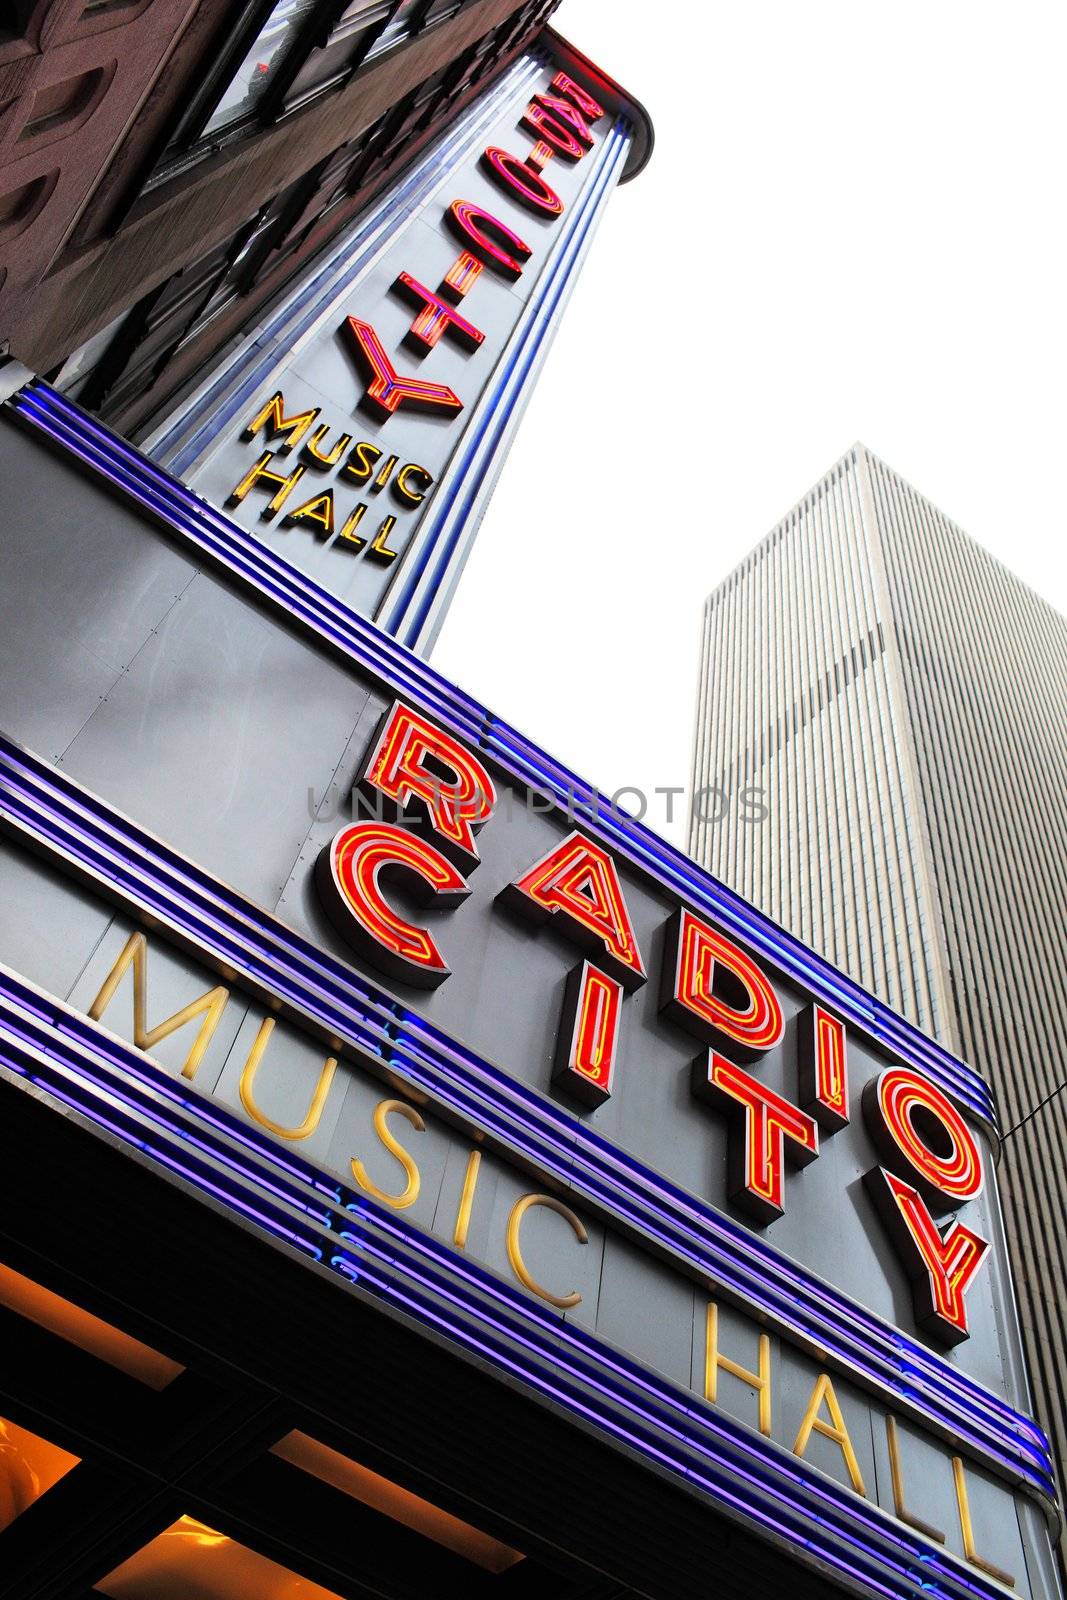 Radio City Music Hall by Stocksnapper